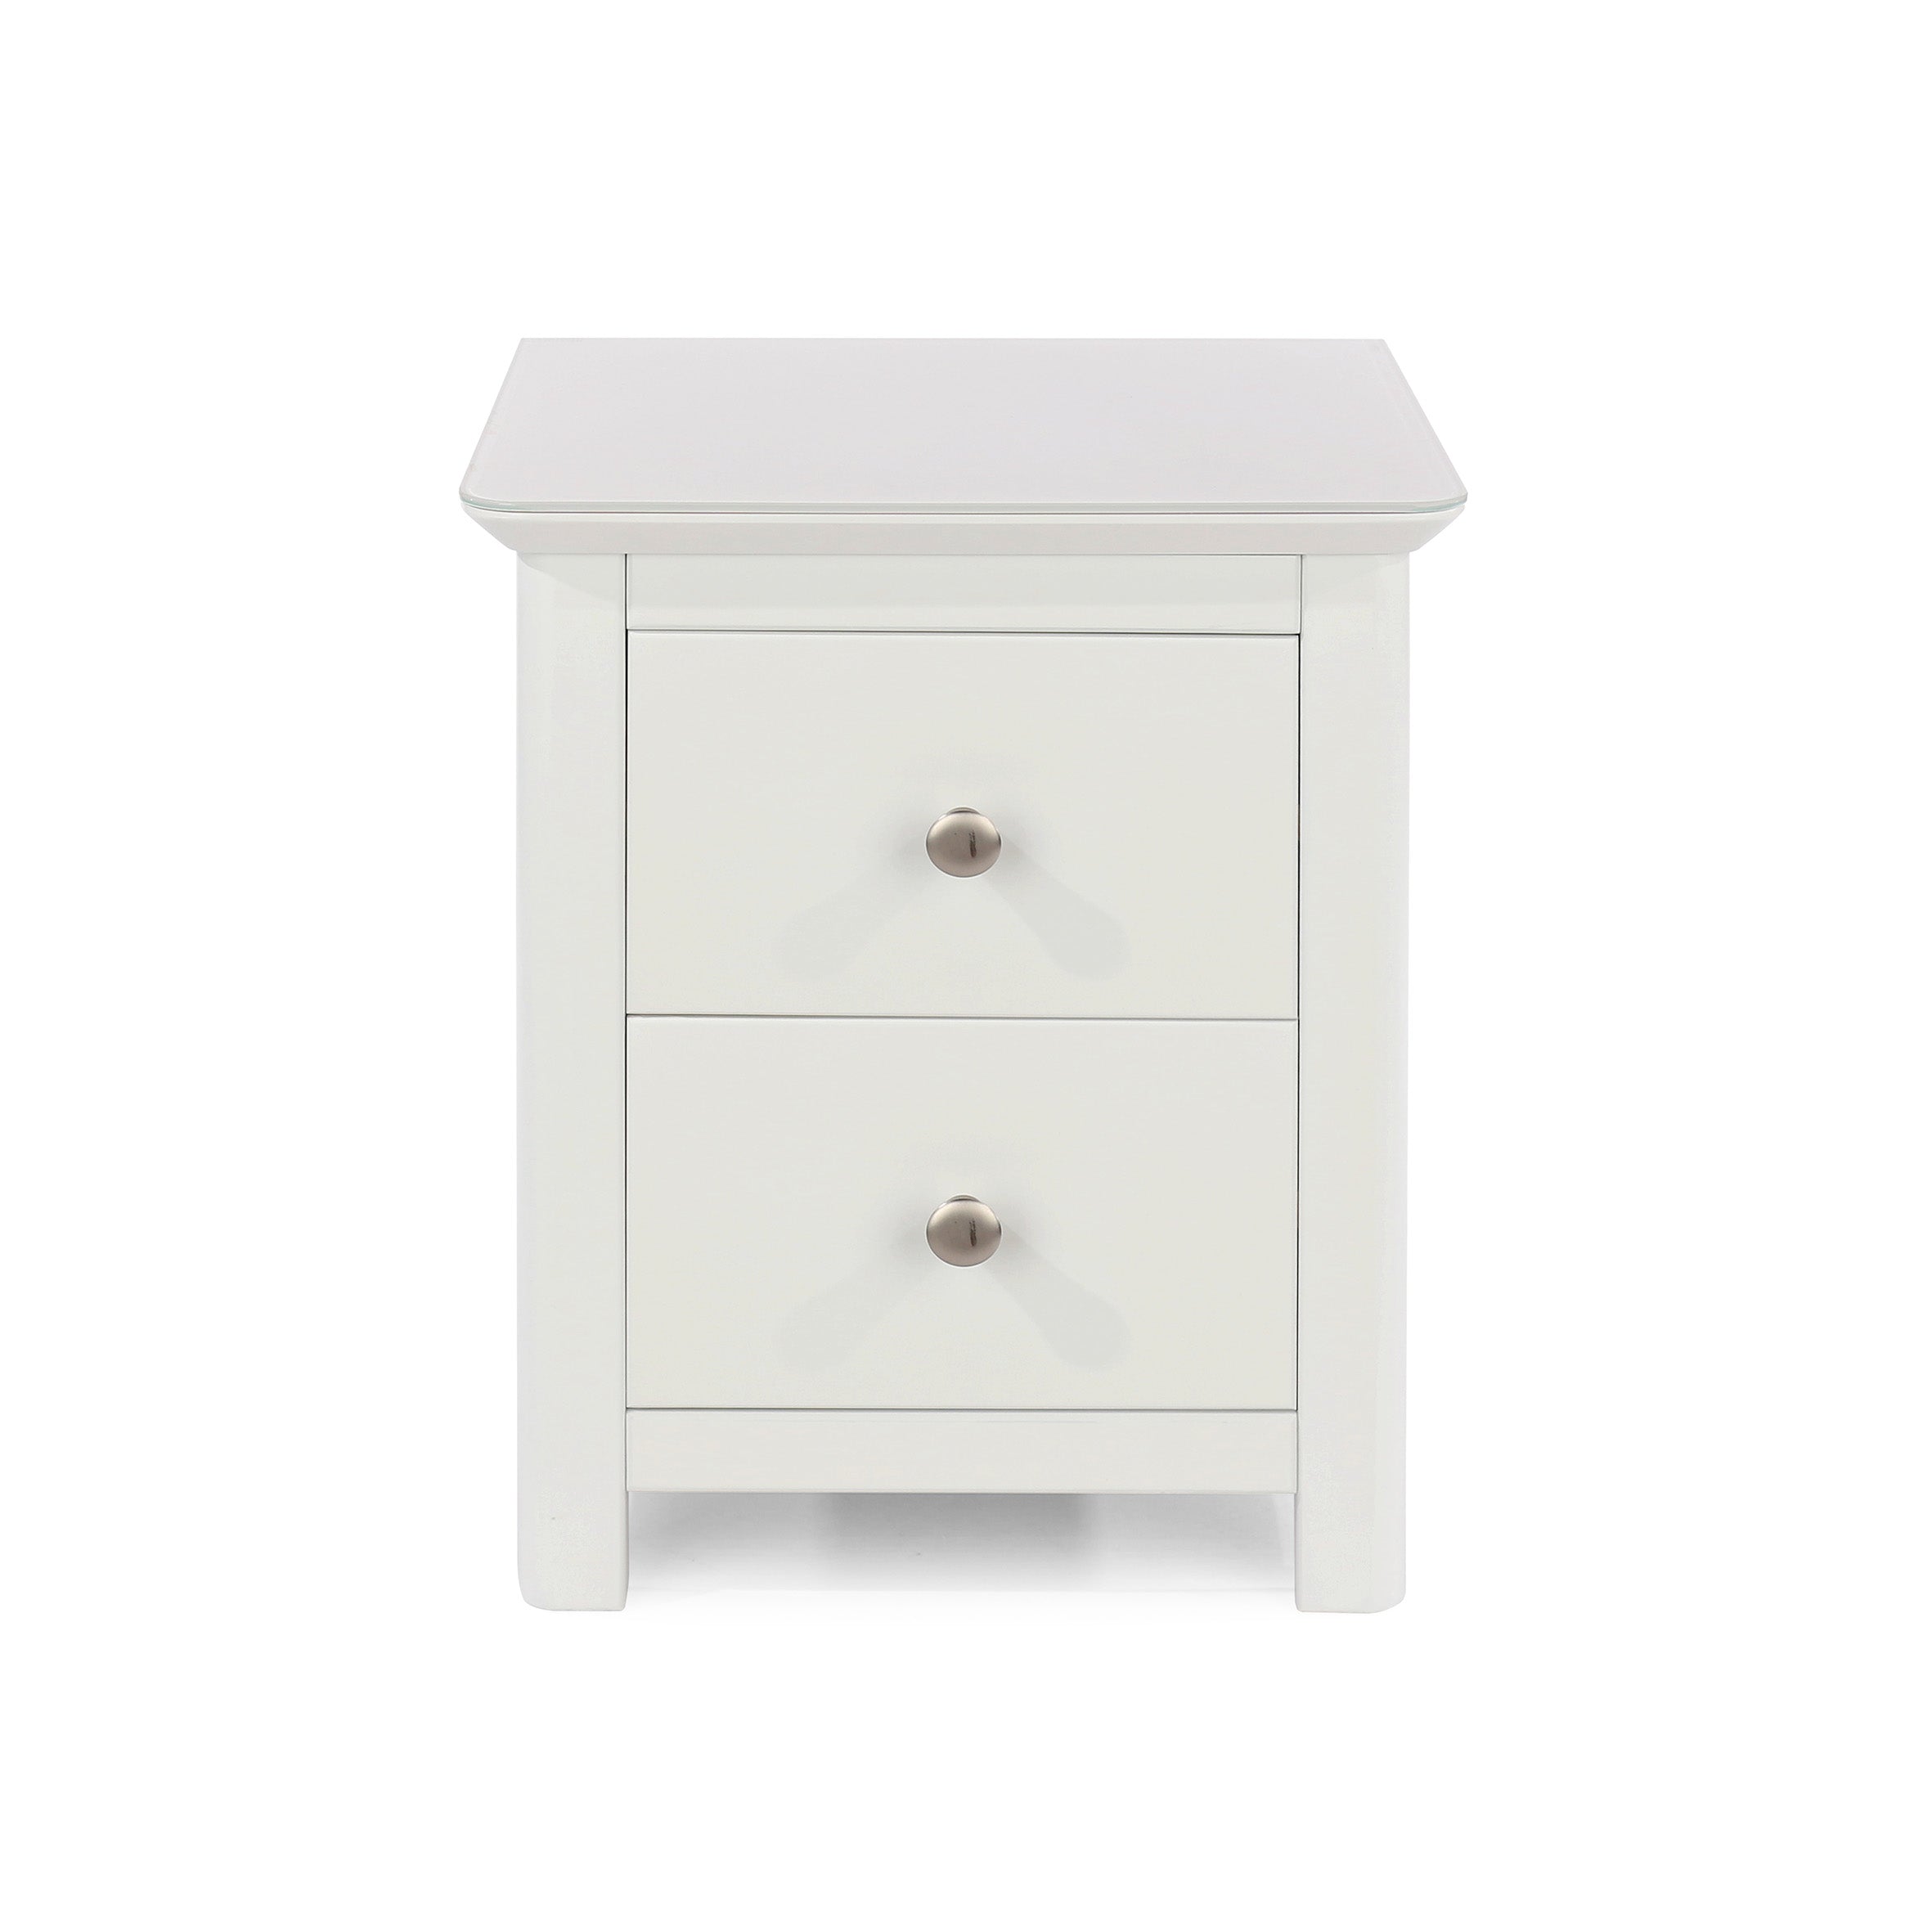 2 Drawer White Cabinet